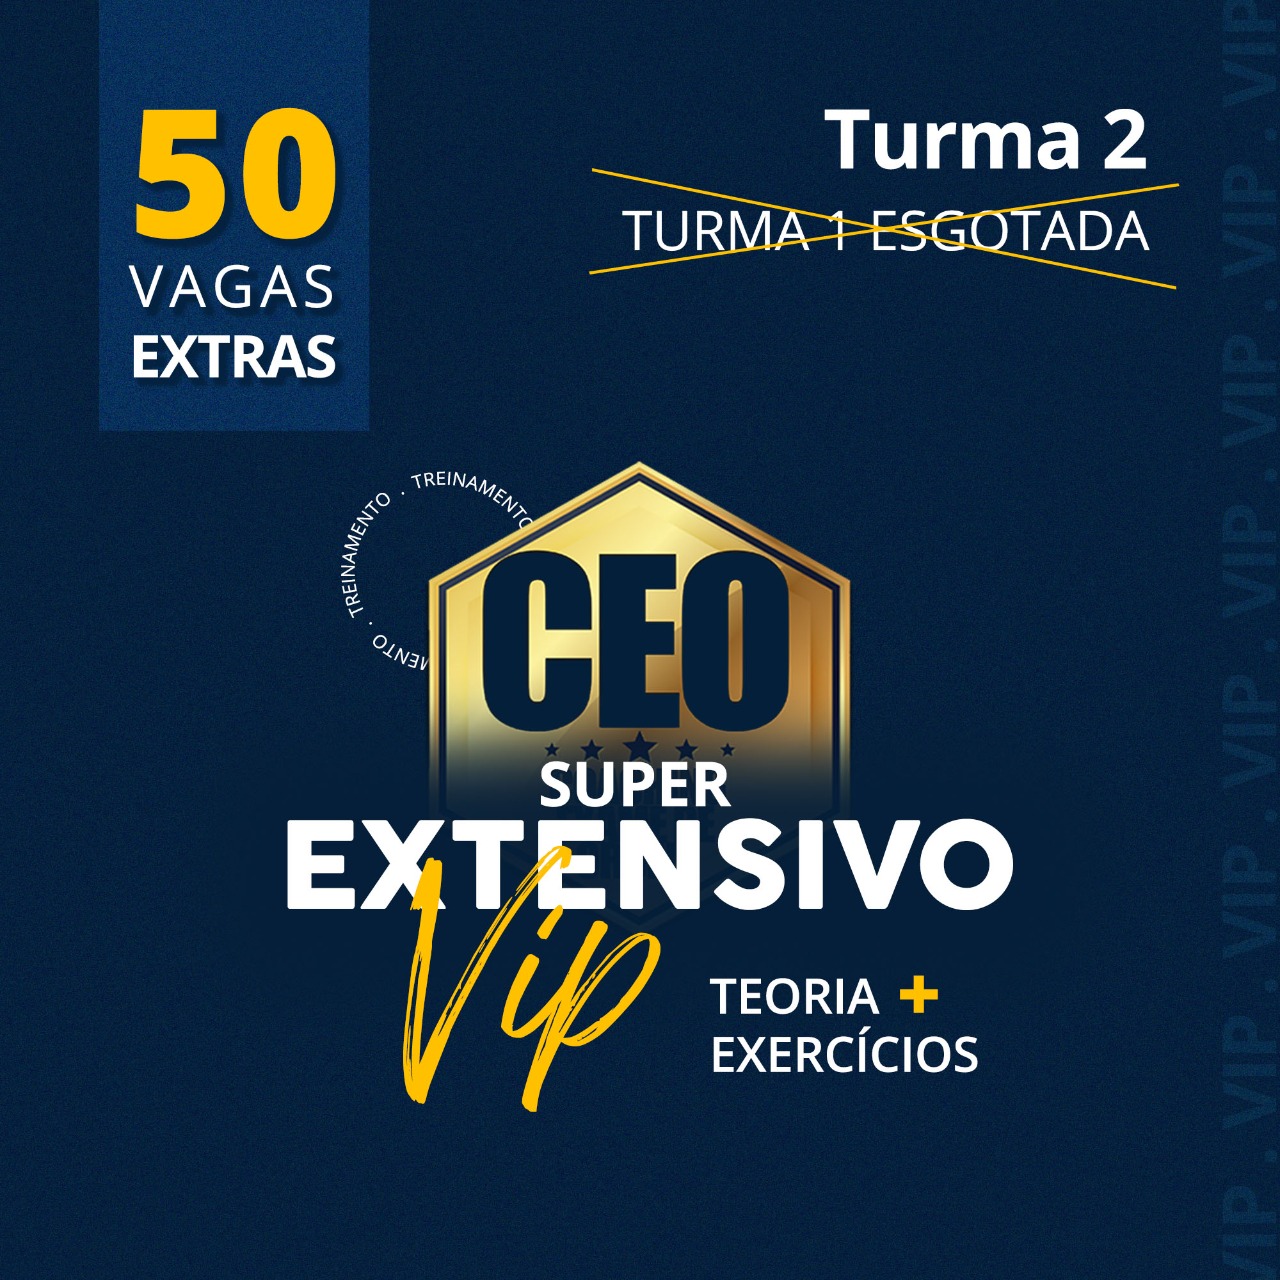 CEO SUPER EXTENSIVO VIP - TEORIA + EXERCÍCIOS TURMA 2 - XXXVI EXAME